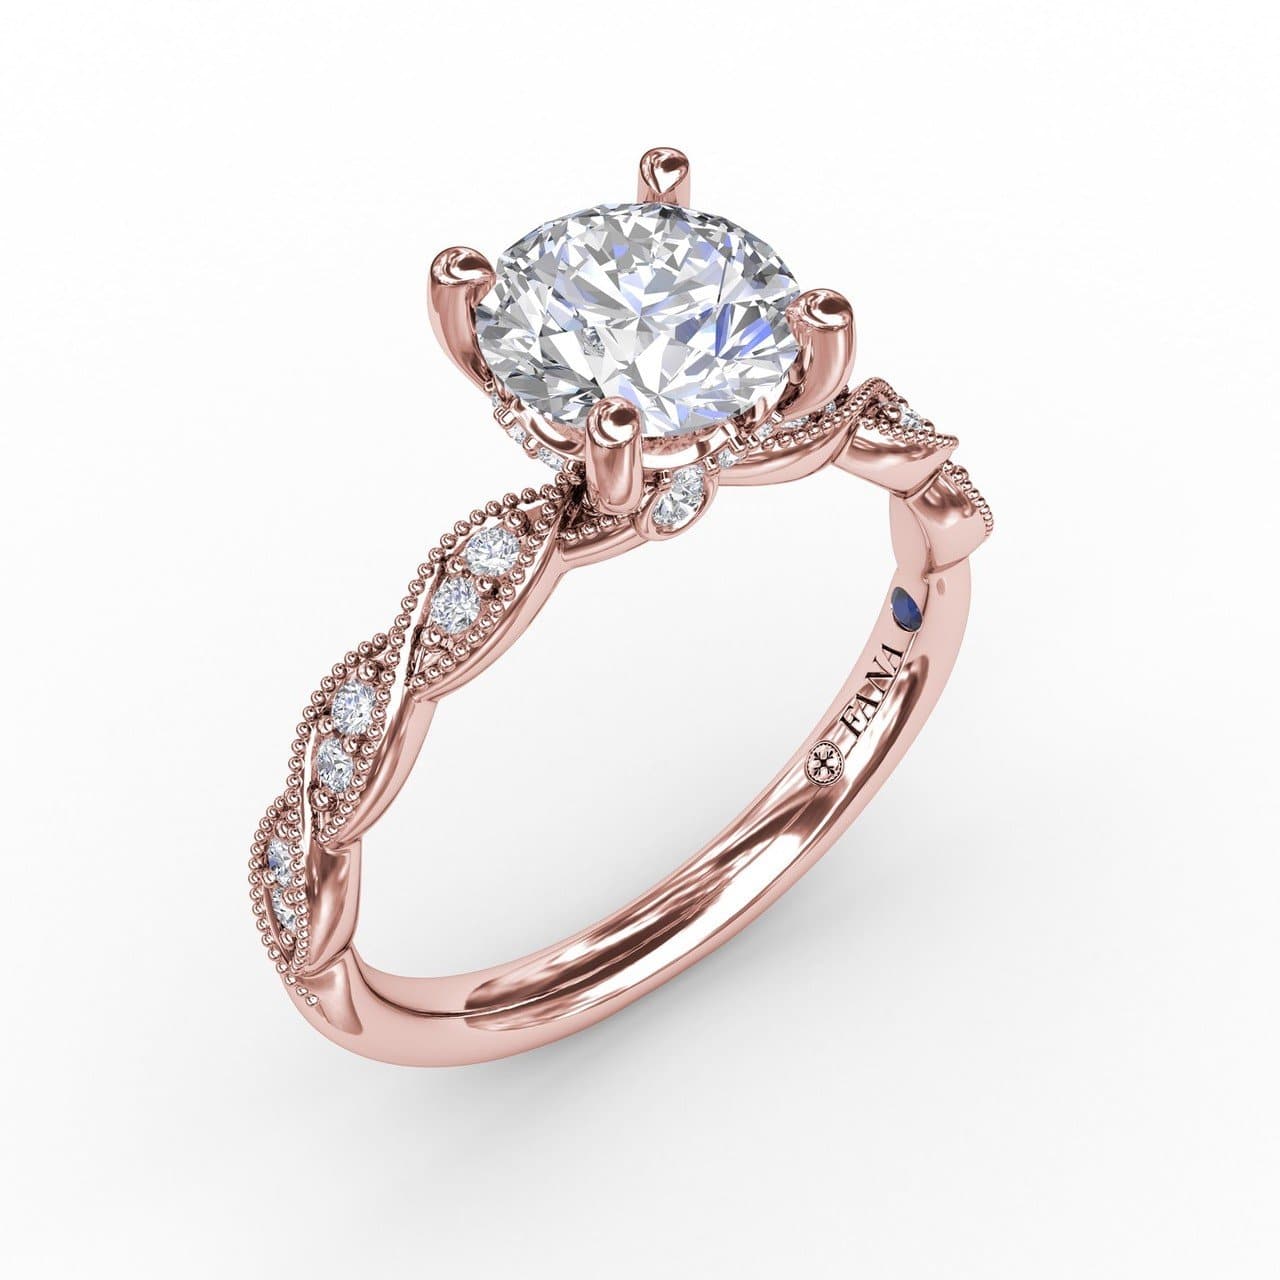 Buy American Diamond Twist Silver Ring for Women